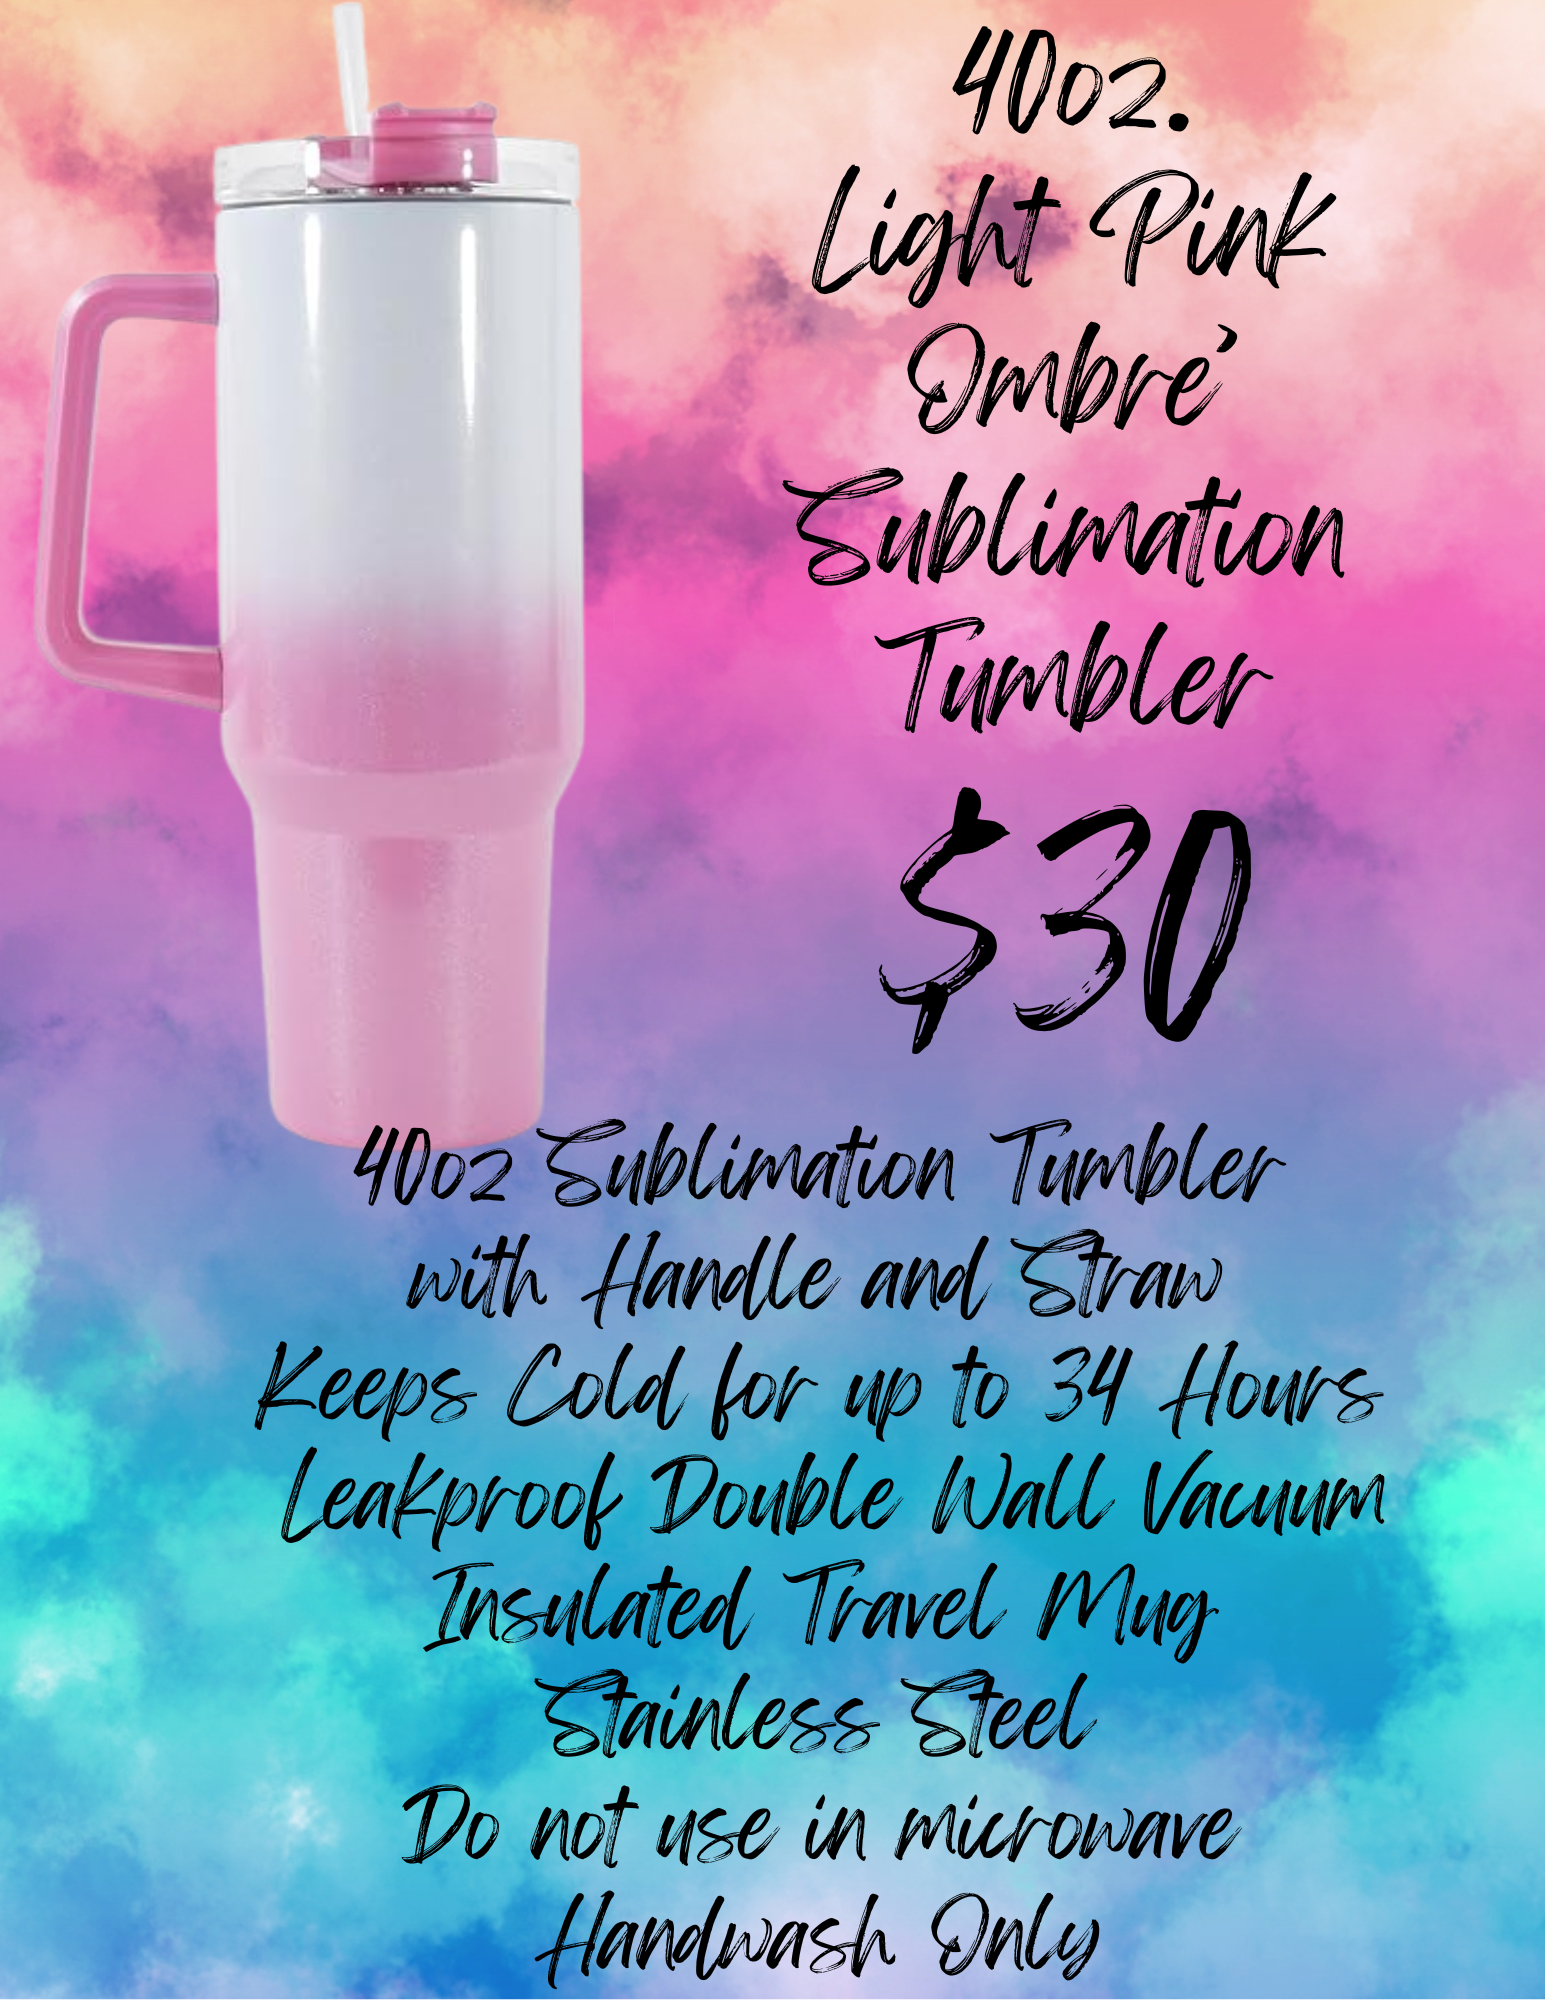 40oz Light Pink Ombre' Tumbler (Sublimation)